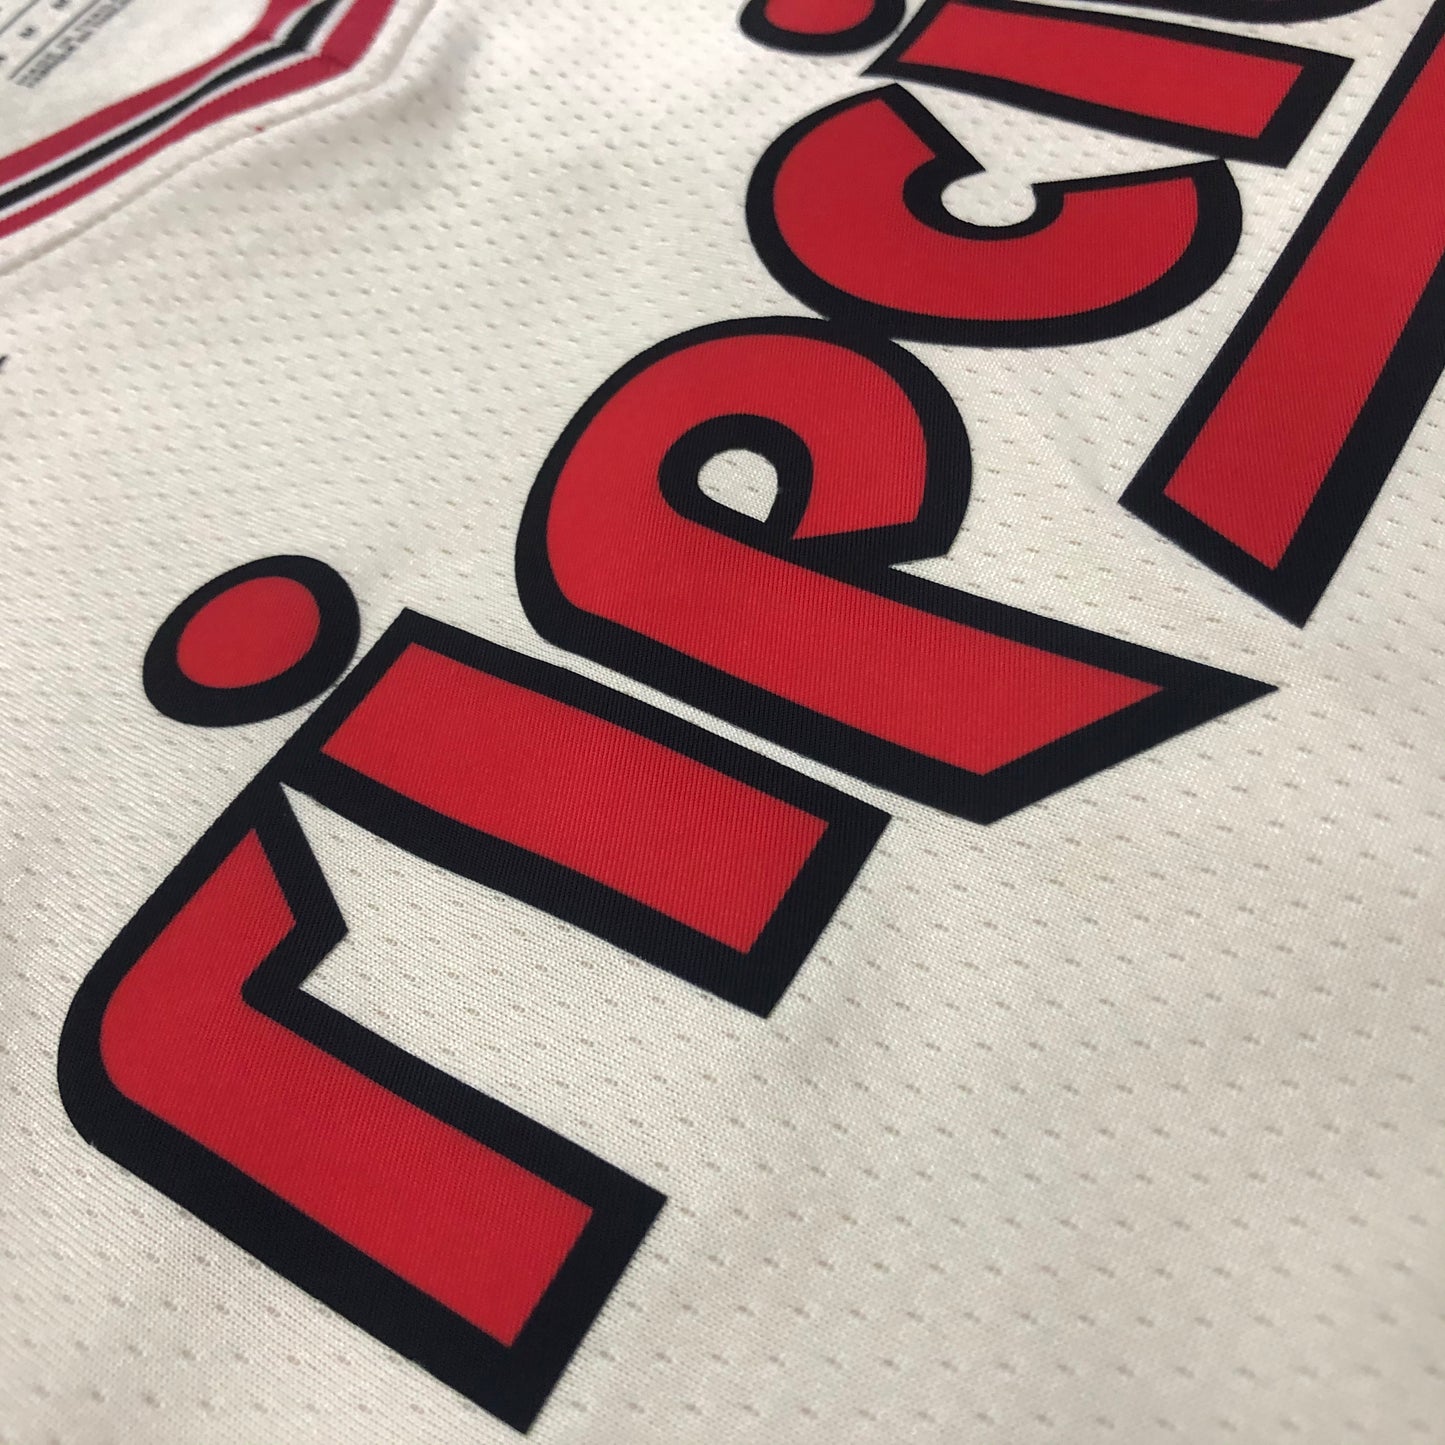 Damian Lillard Portland Trail Blazers 2019/20 NBA Swingman Jersey - Nike Classic Edition